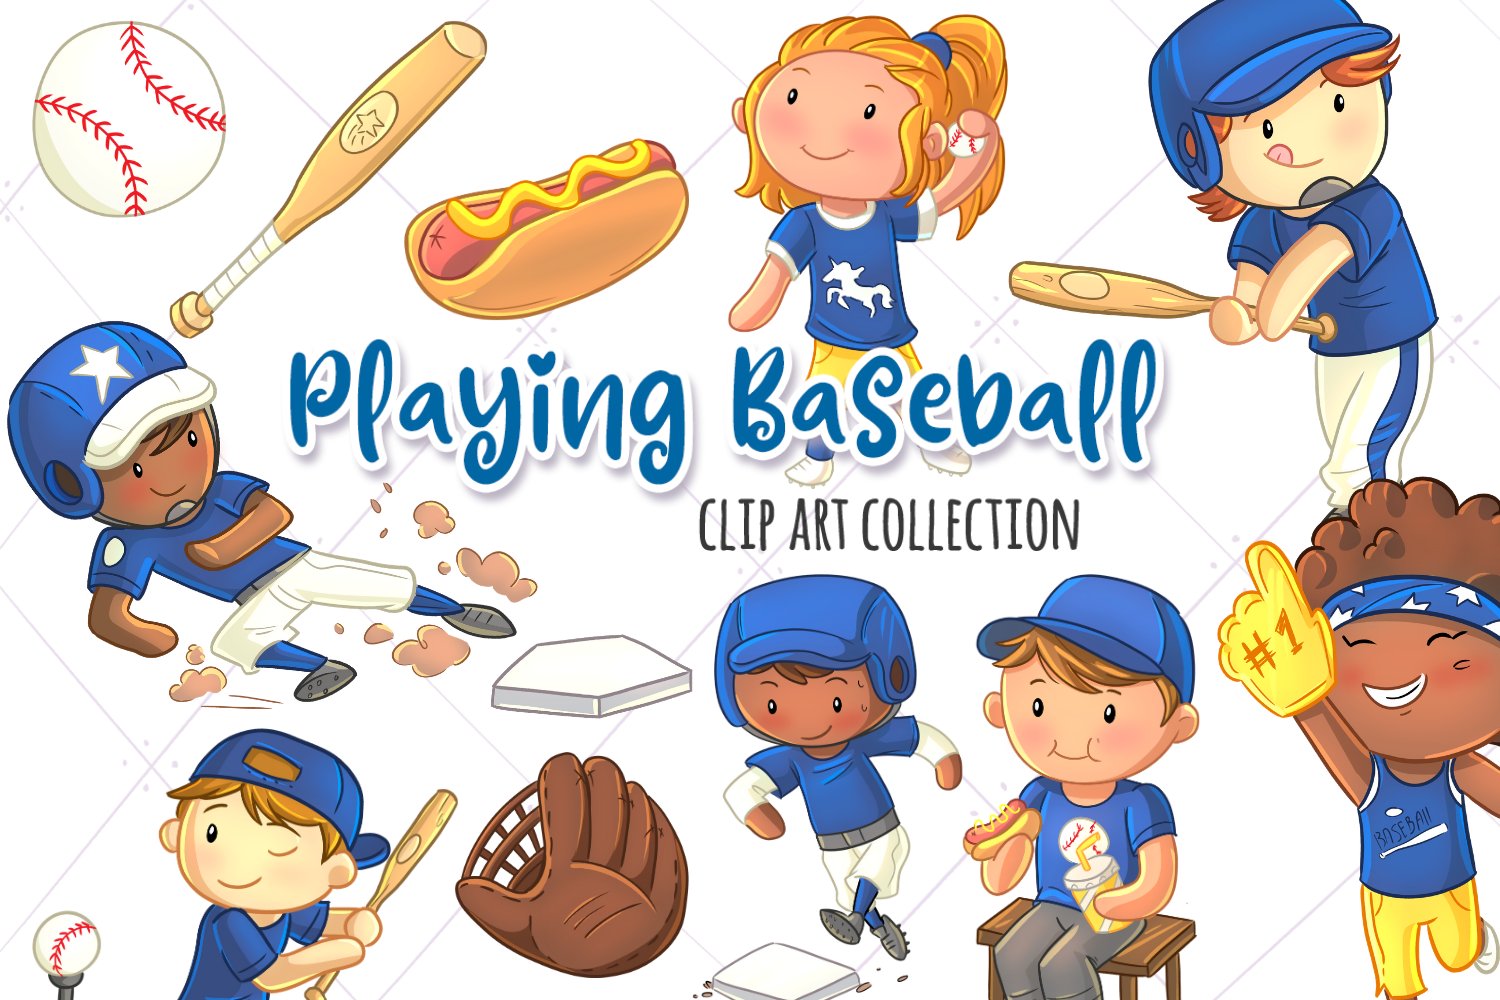 Kids Playing Baseball Clip Art cover image.